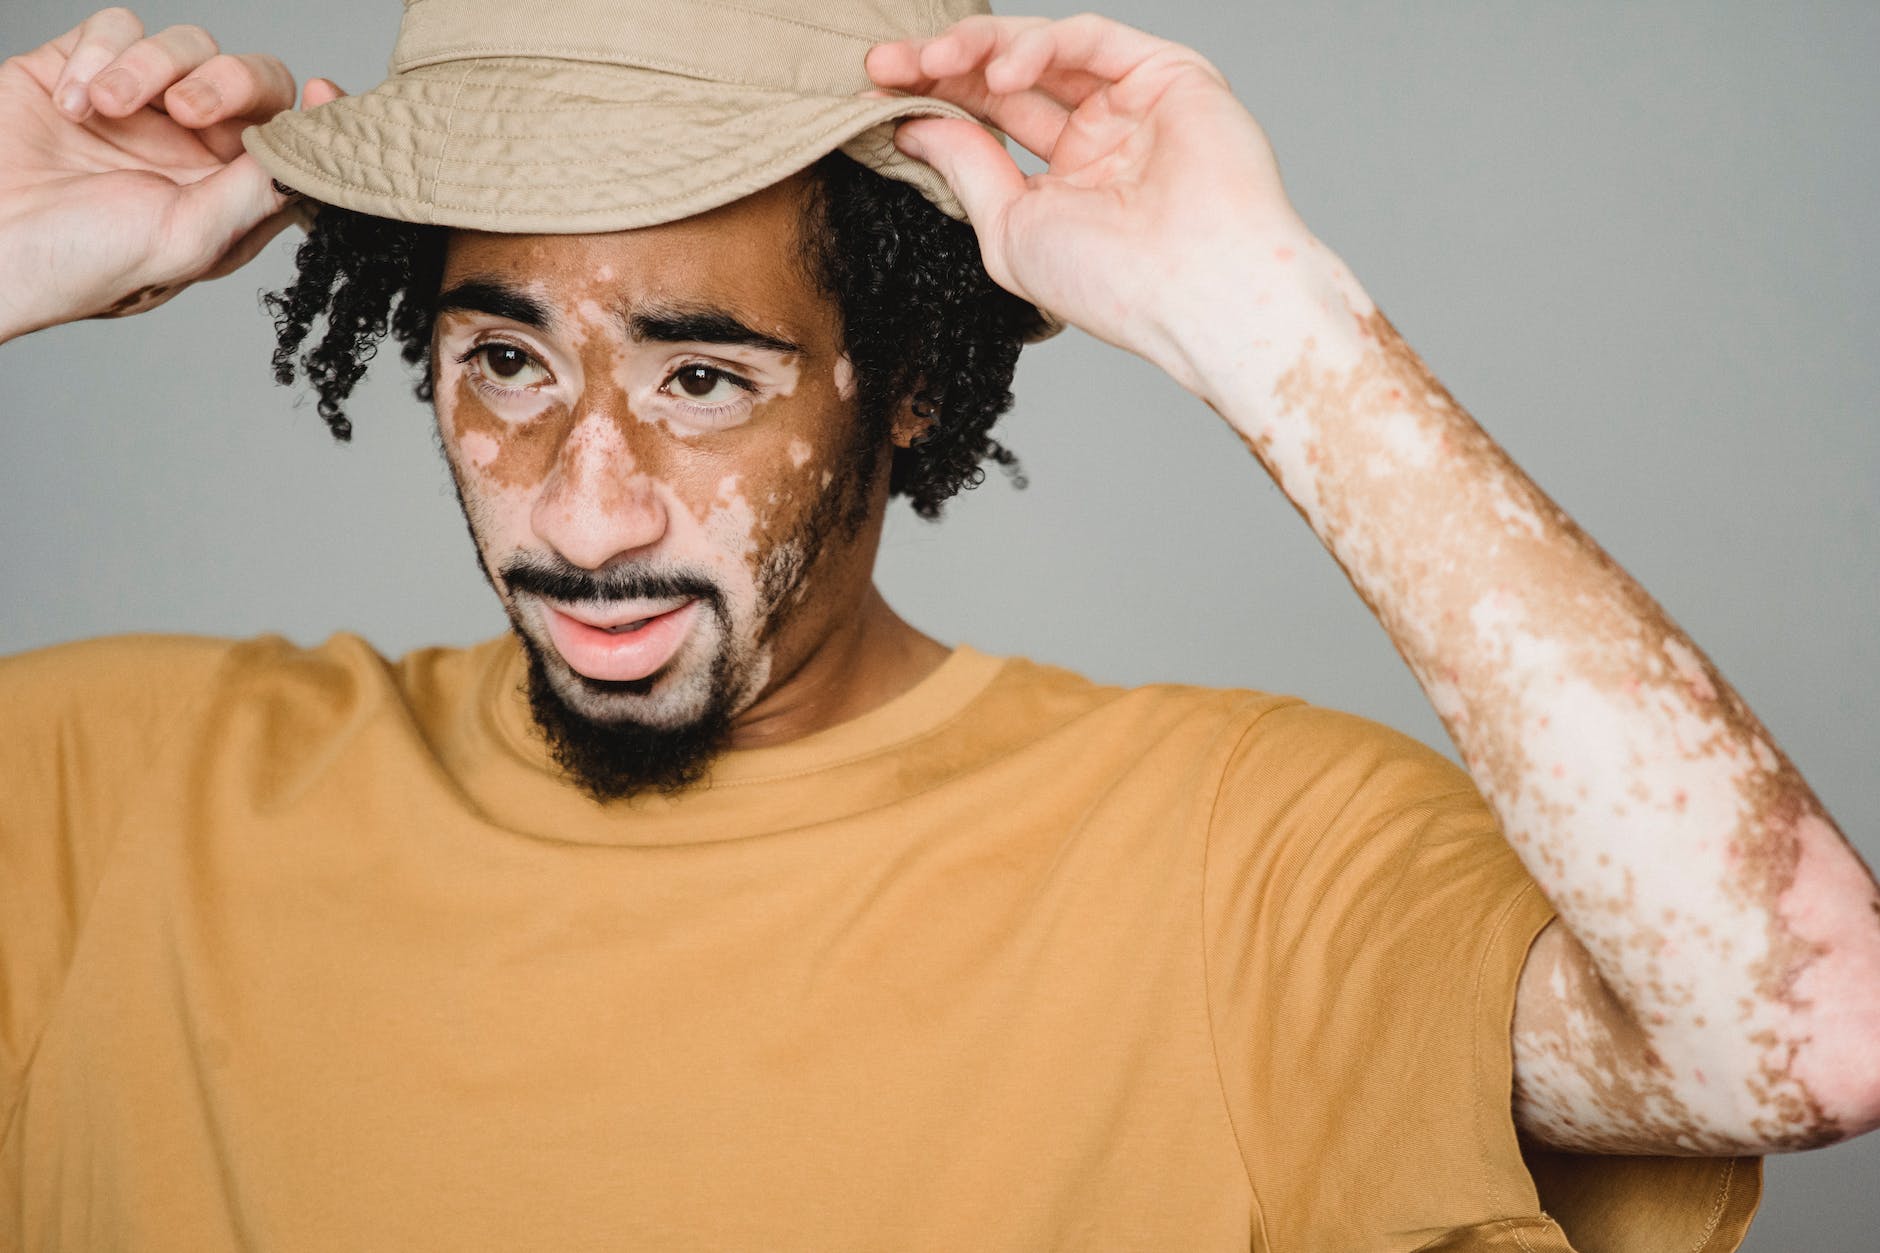 man with vitiligo touching hat